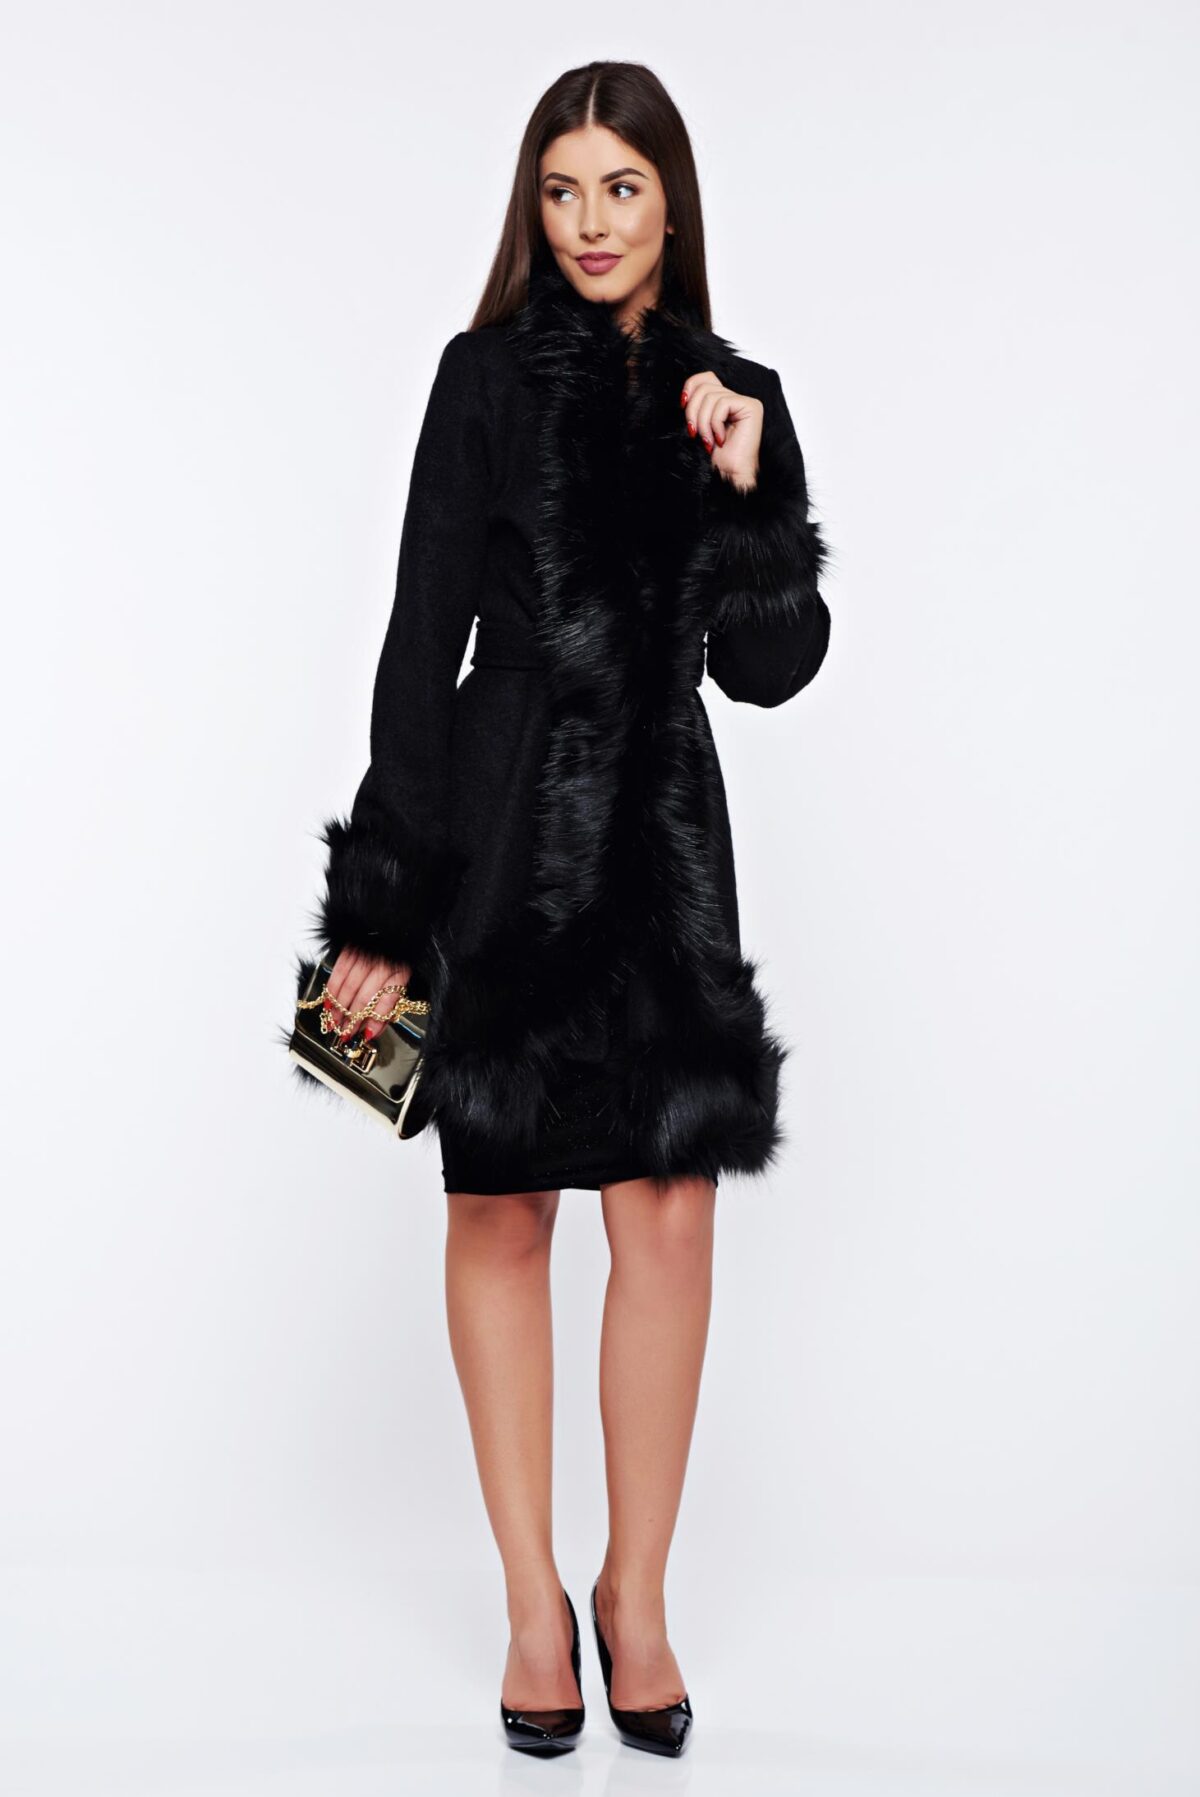 Black Elegant Coat Of Wool With Faux Fur Details